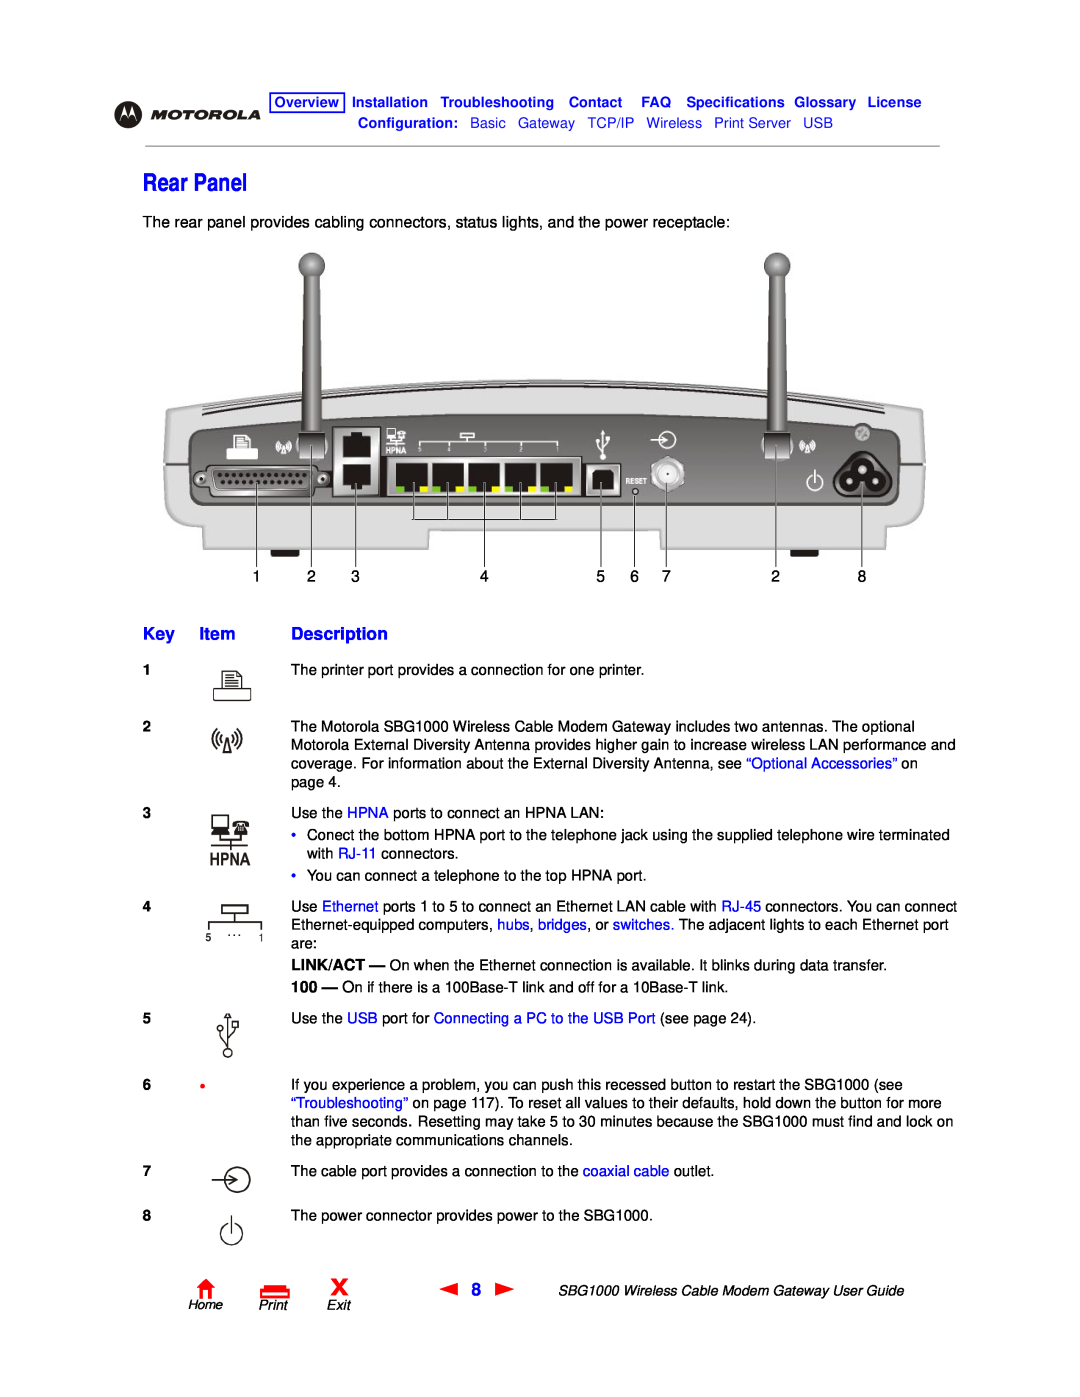 Motorola SBG1000 Rear Panel, Description, Configuration Basic Gateway TCP/IP Wireless Print Server USB, Home Print Exit 